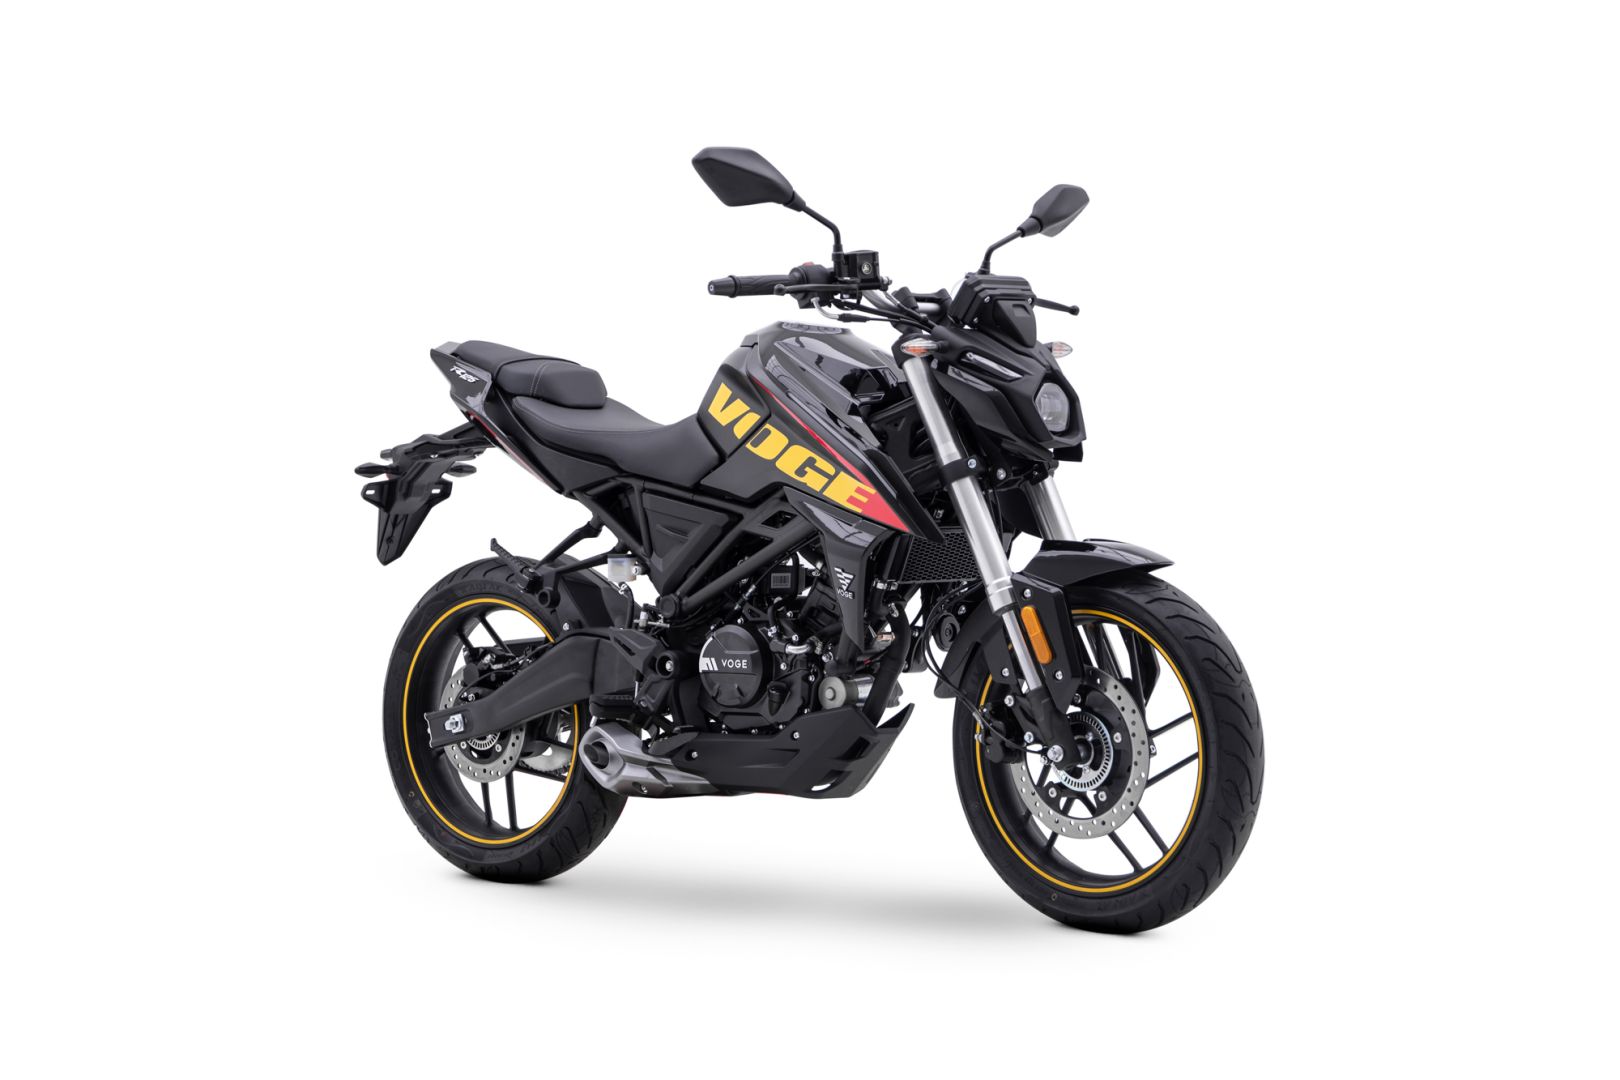 Motocicleta voge 125r naked, culoare negru